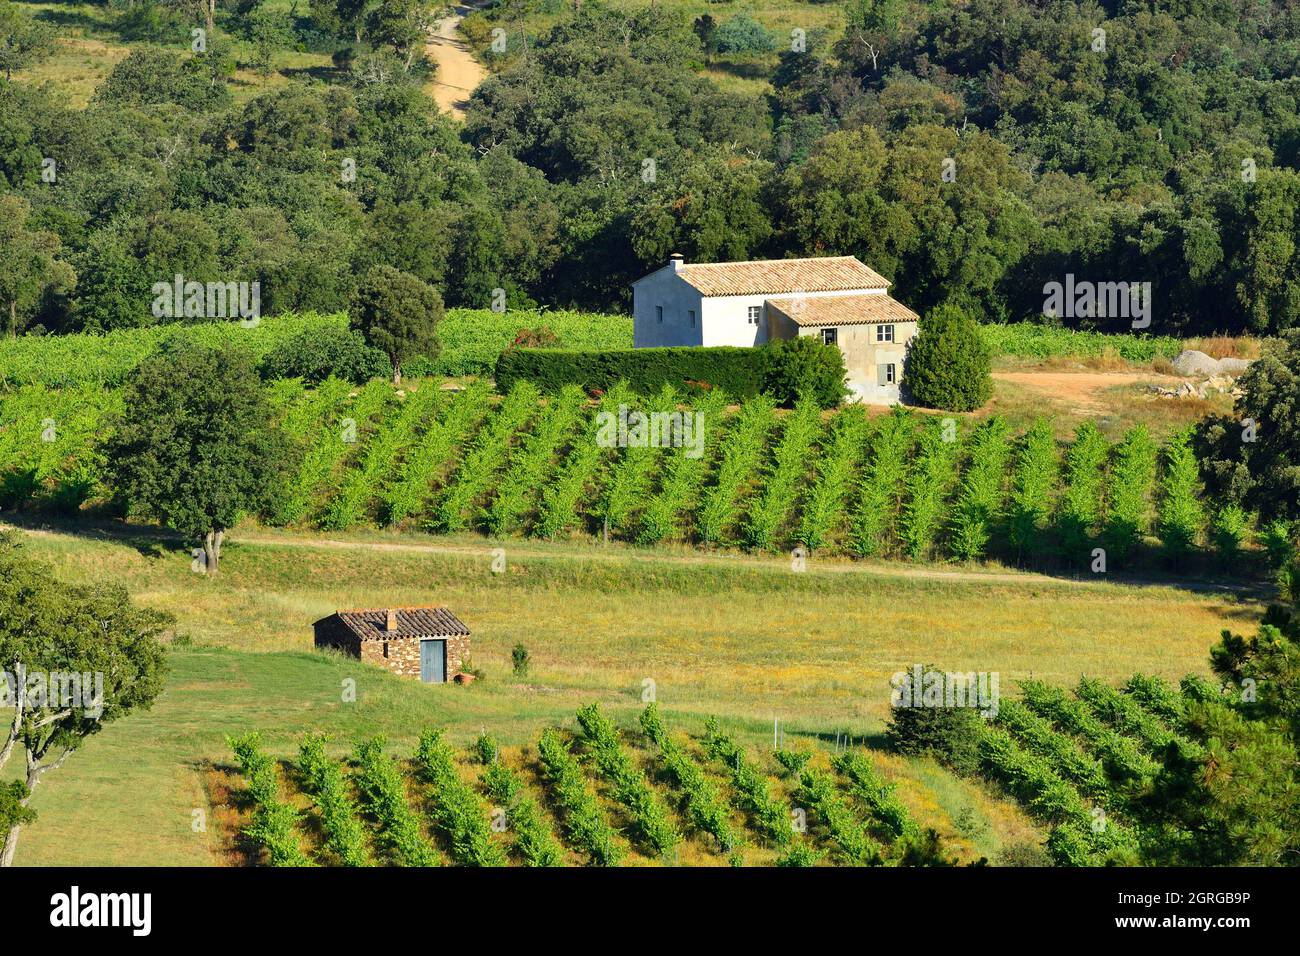 France, Var, Golf of St Tropez, around the village of Grimaud, vineyard Stock Photo